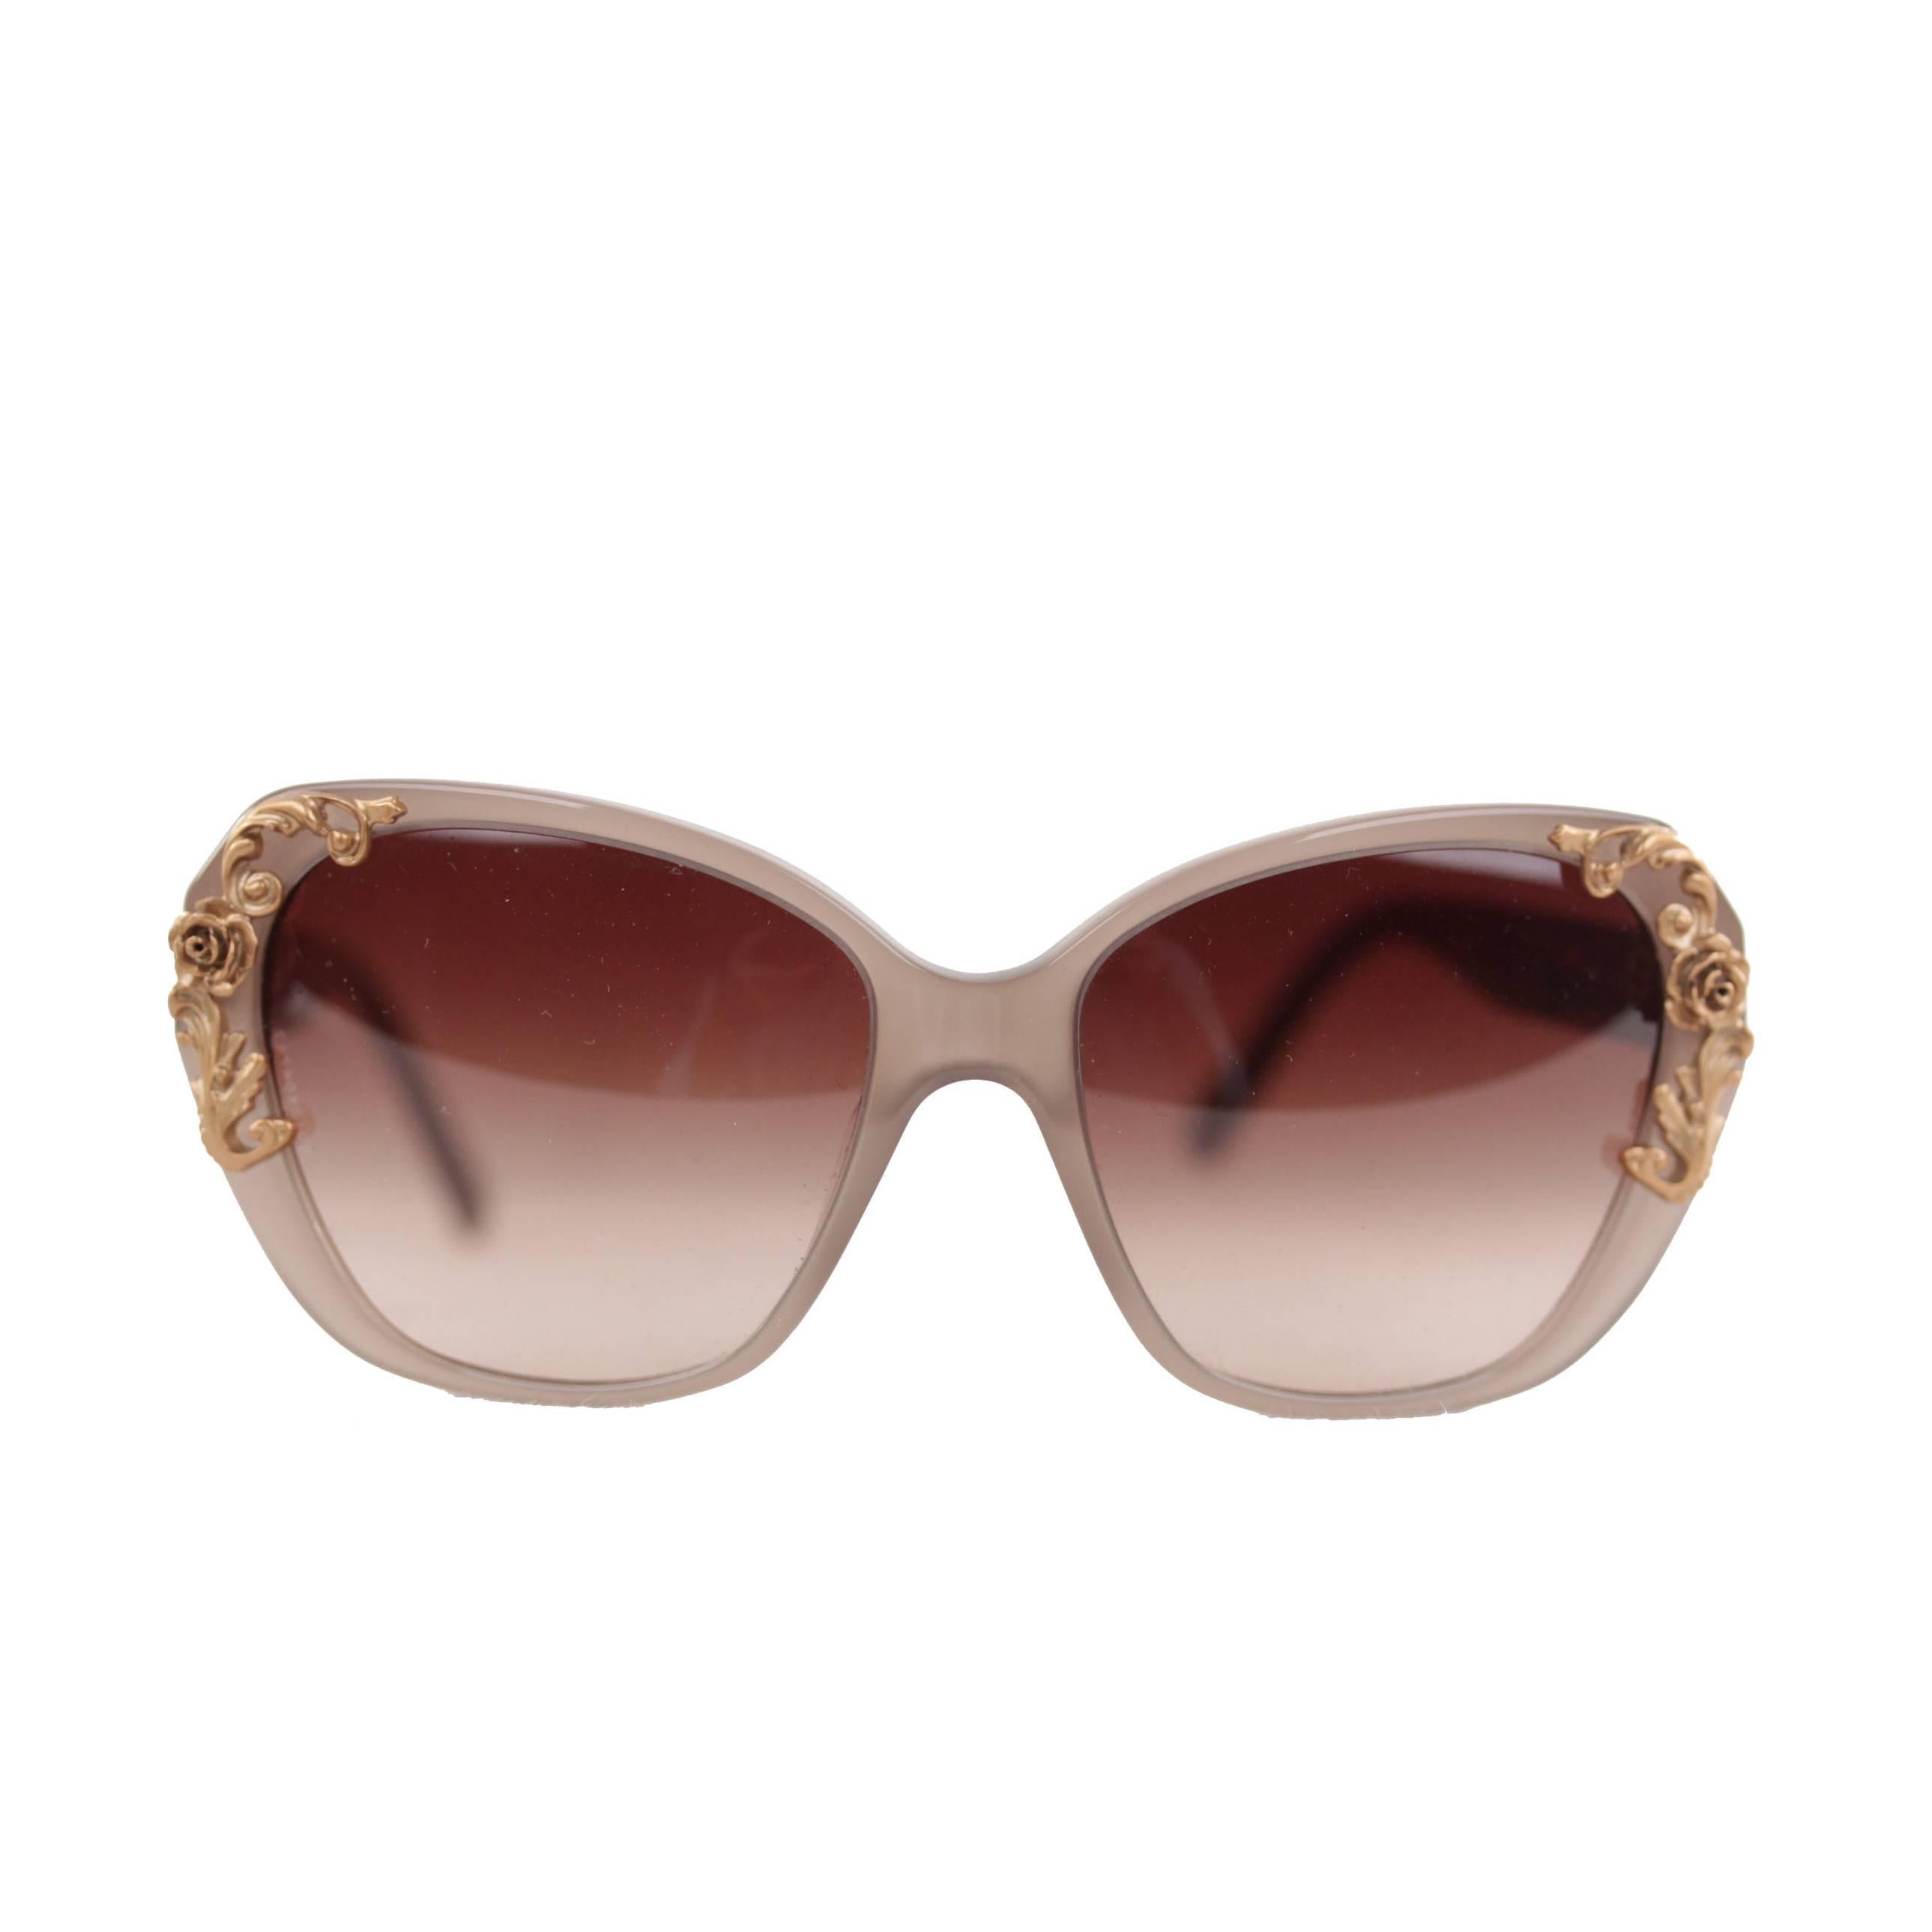 DOLCE & GABBANA sunglasses DG4167 SICILIAN BAROQUE ROSE gold eyewear w/CASE